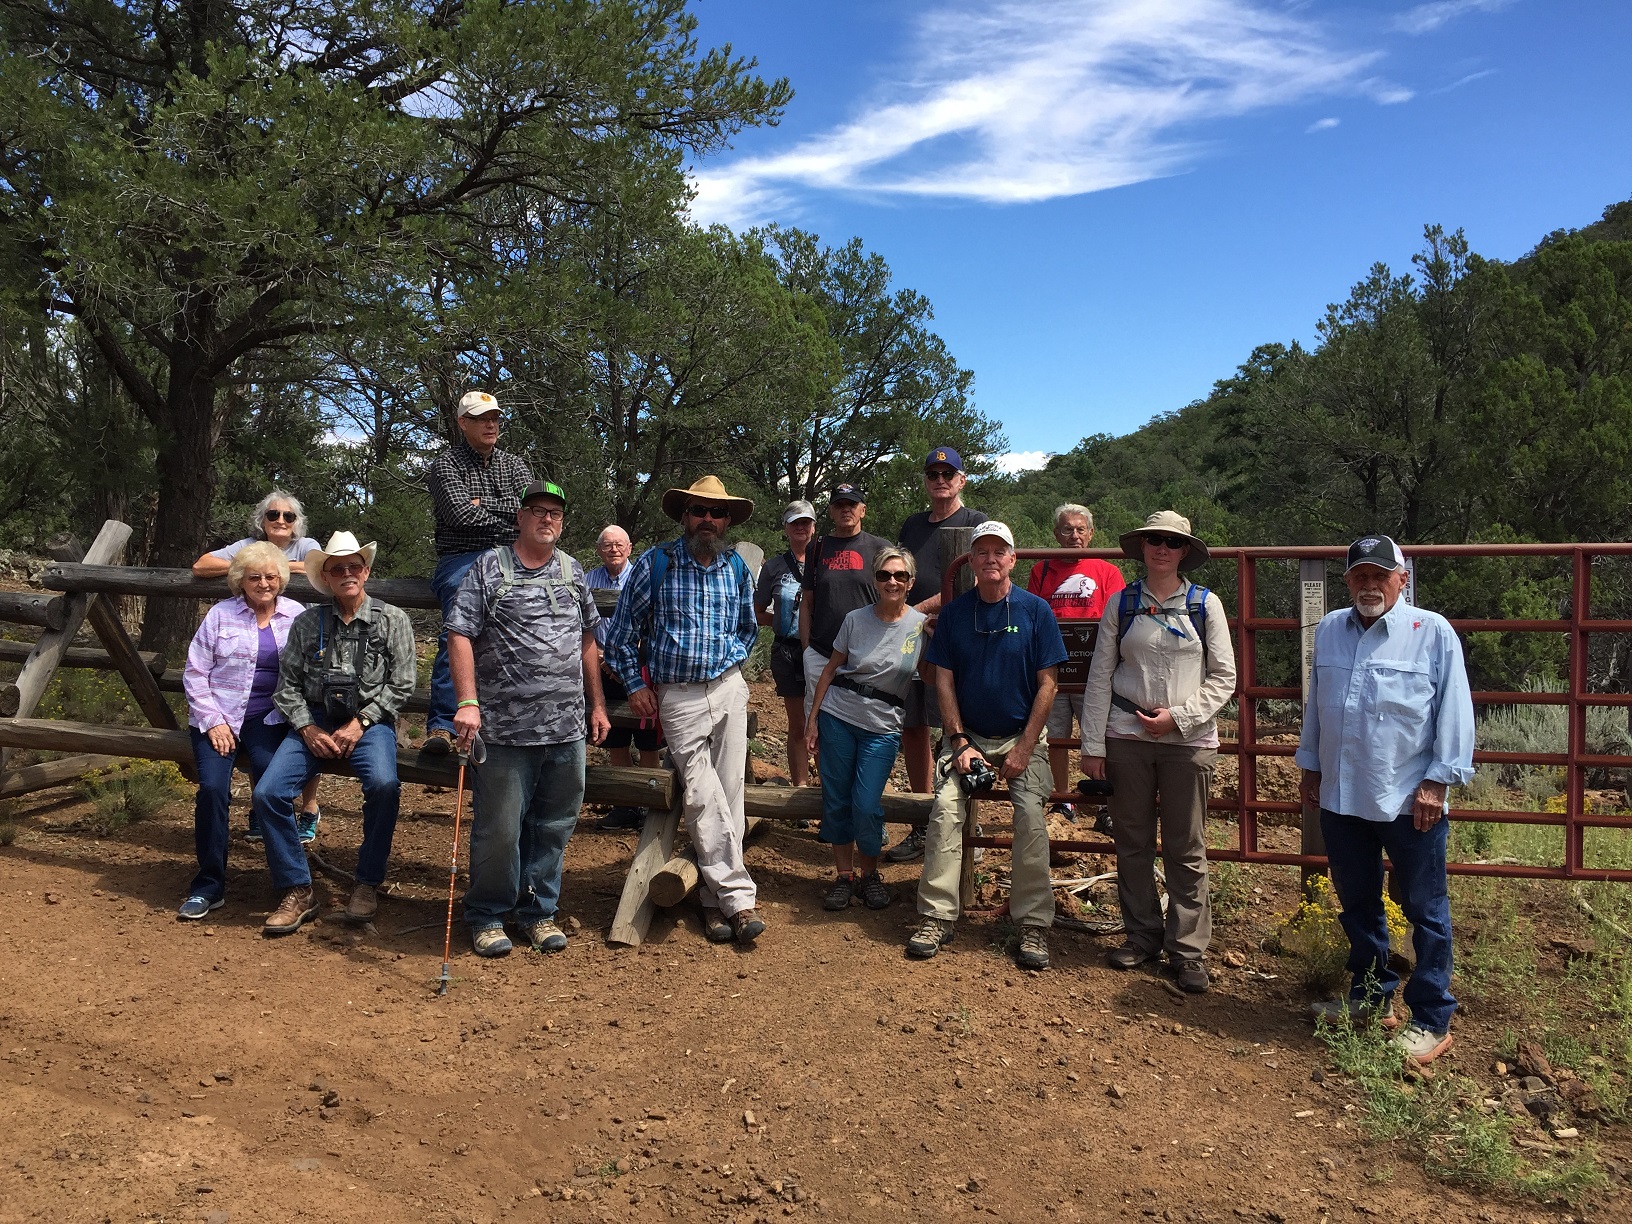 DASIA field trip attendees at the Nampaweap trailhead on the Arizona Strip